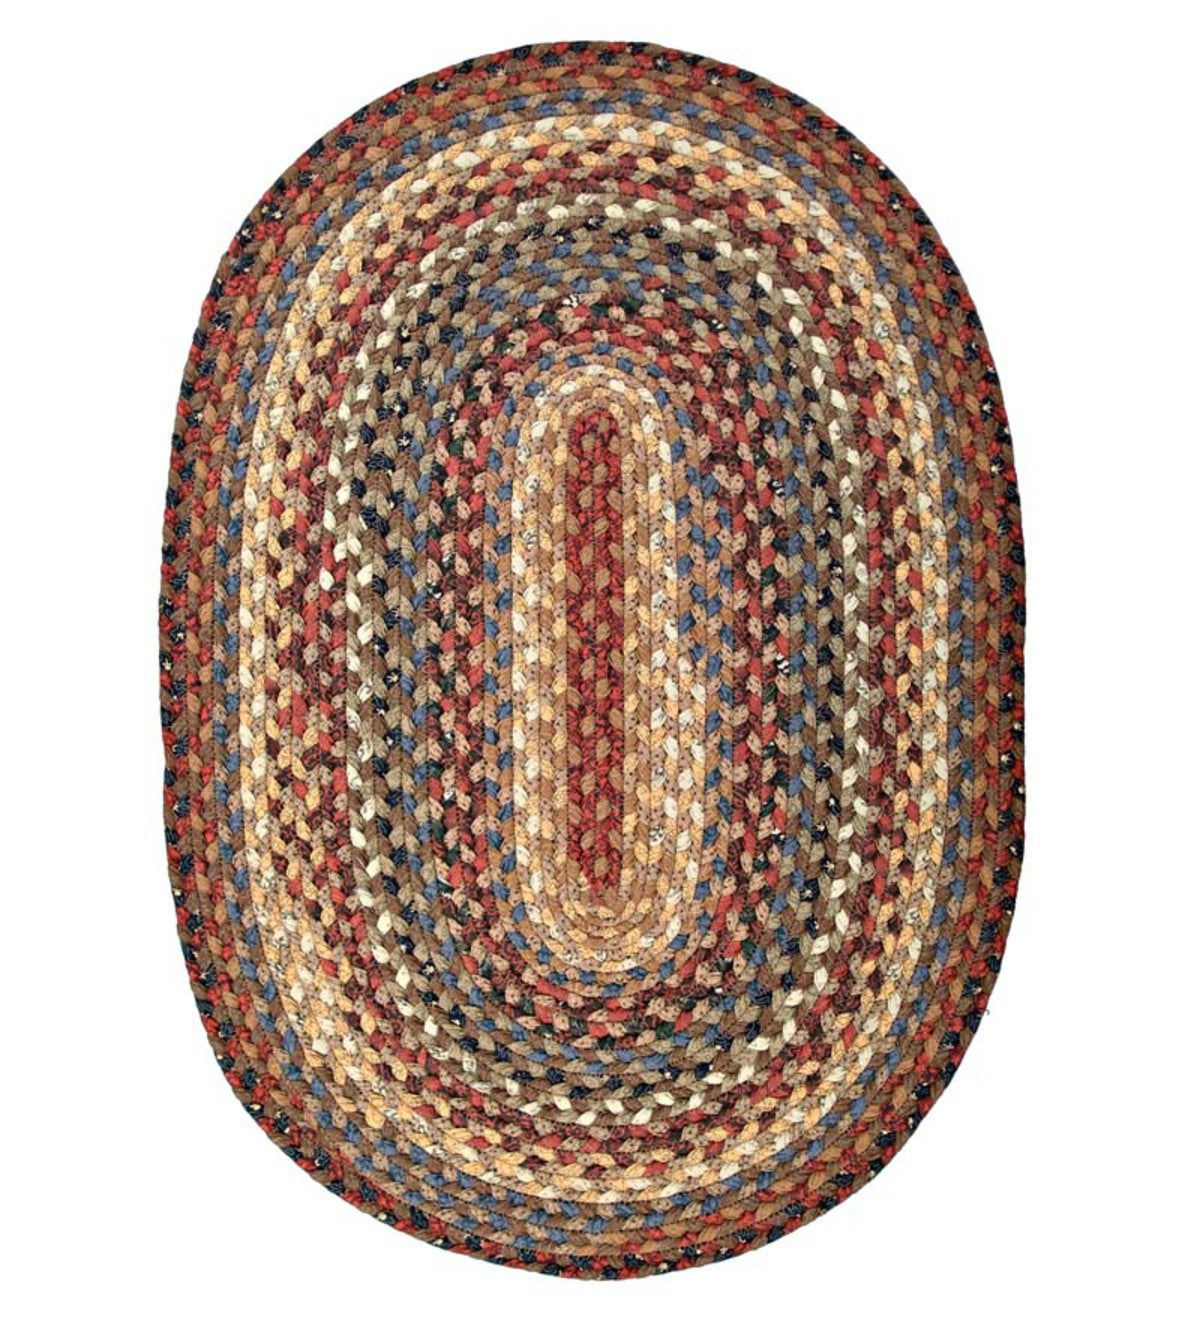 Oval Cotton Blend Braided Rug, 2' x 3' - Biscotti